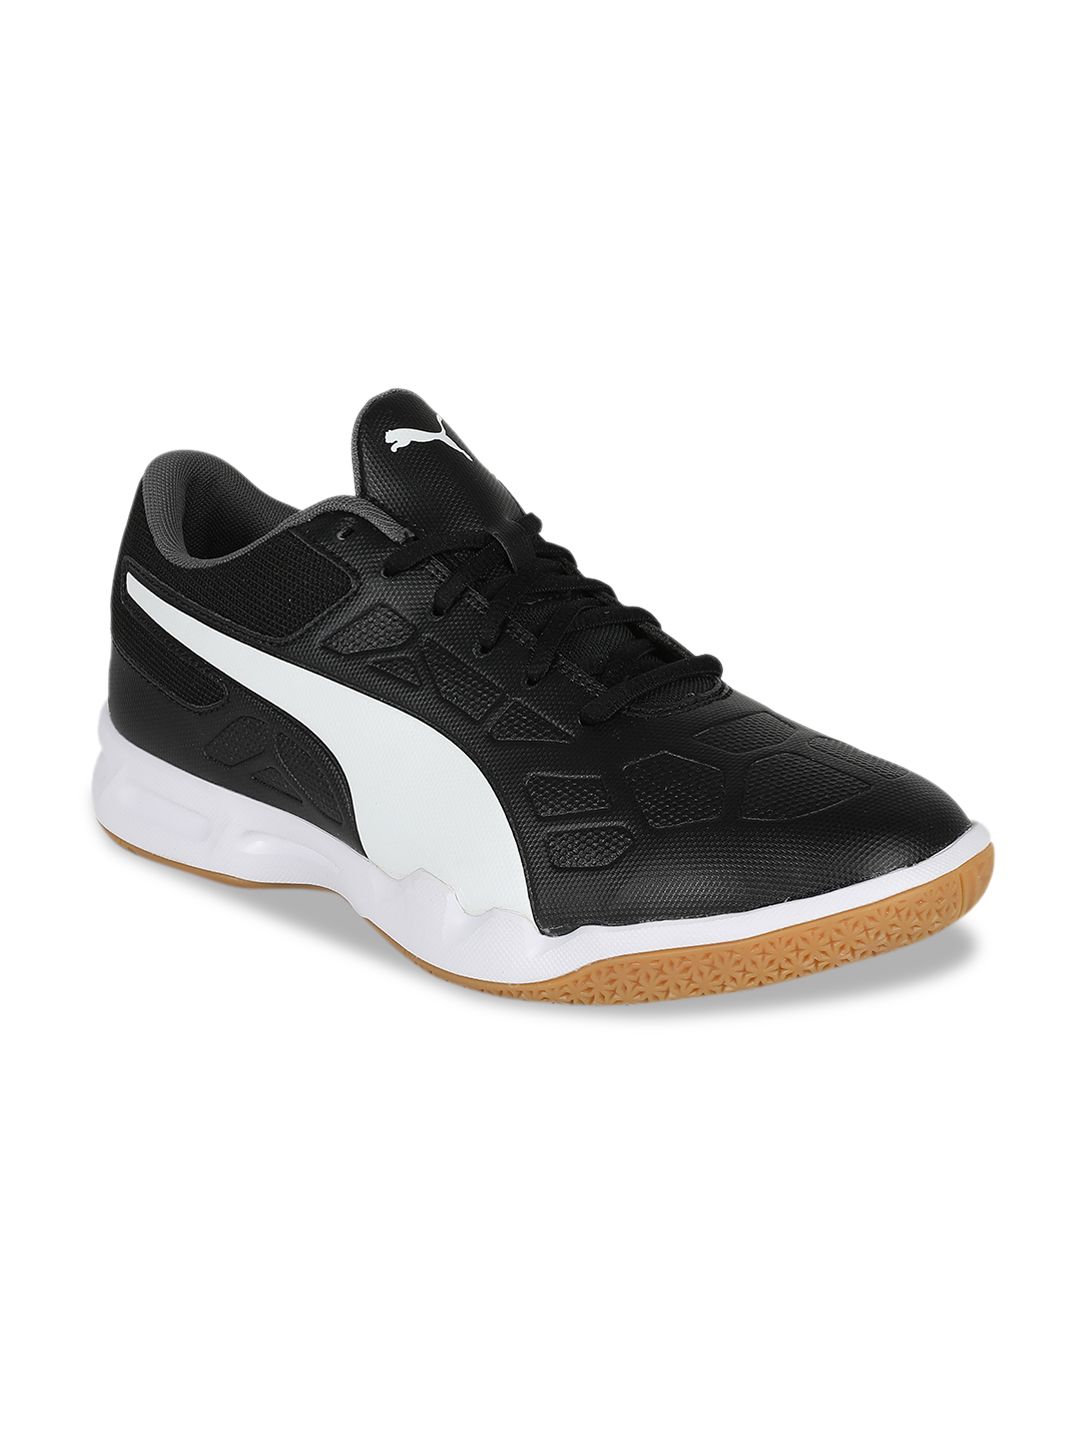 Puma Unisex Black & White Colourblocked Tenaz Badminton Shoes Price in India